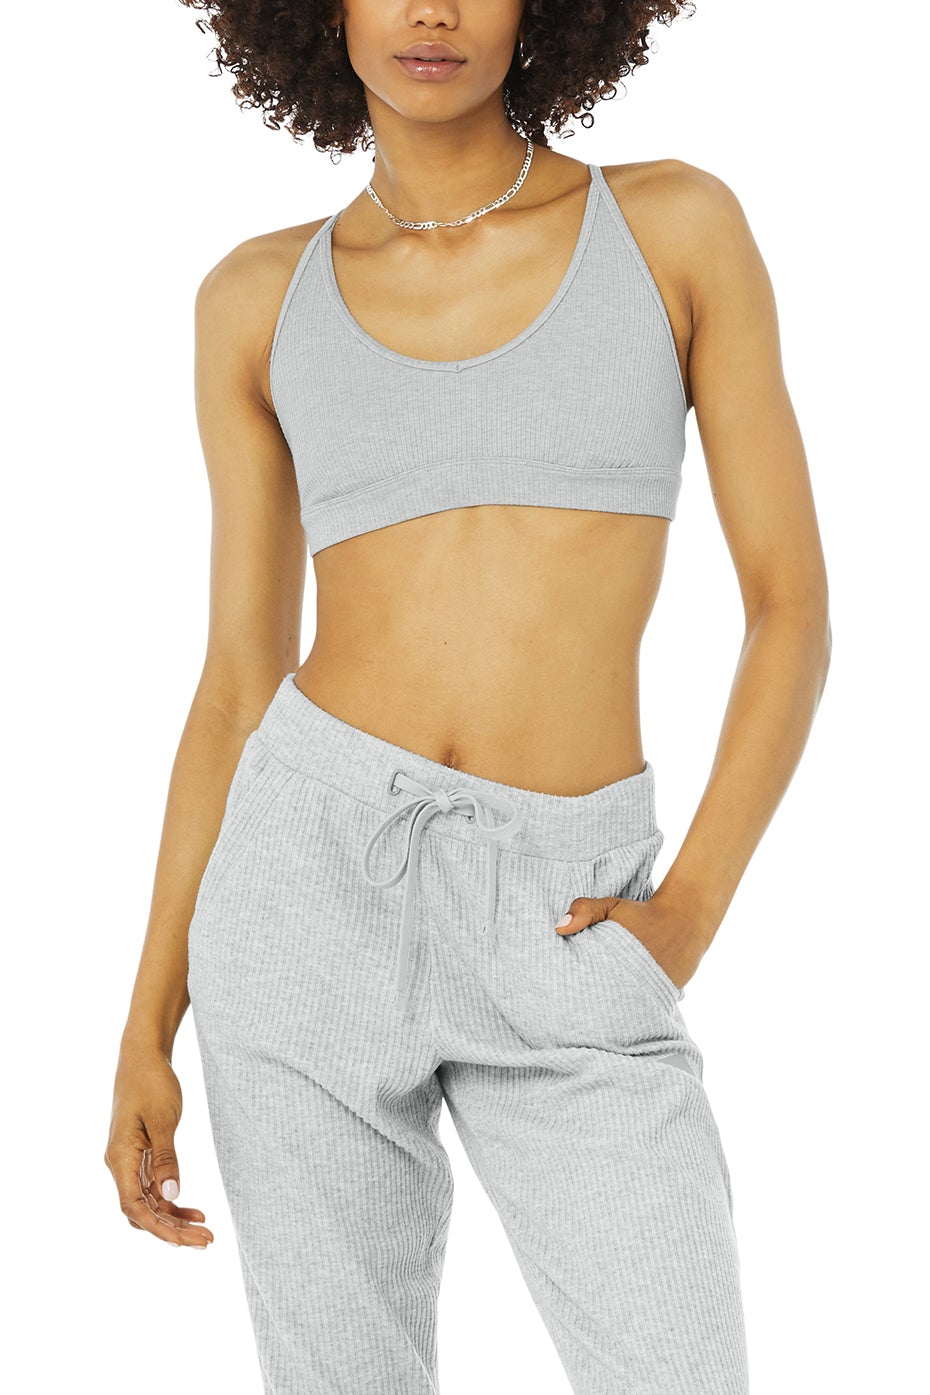 Alo Yoga Women's Muse Ribbed Sweatpants, Athletic Heather Gray,XS - US 